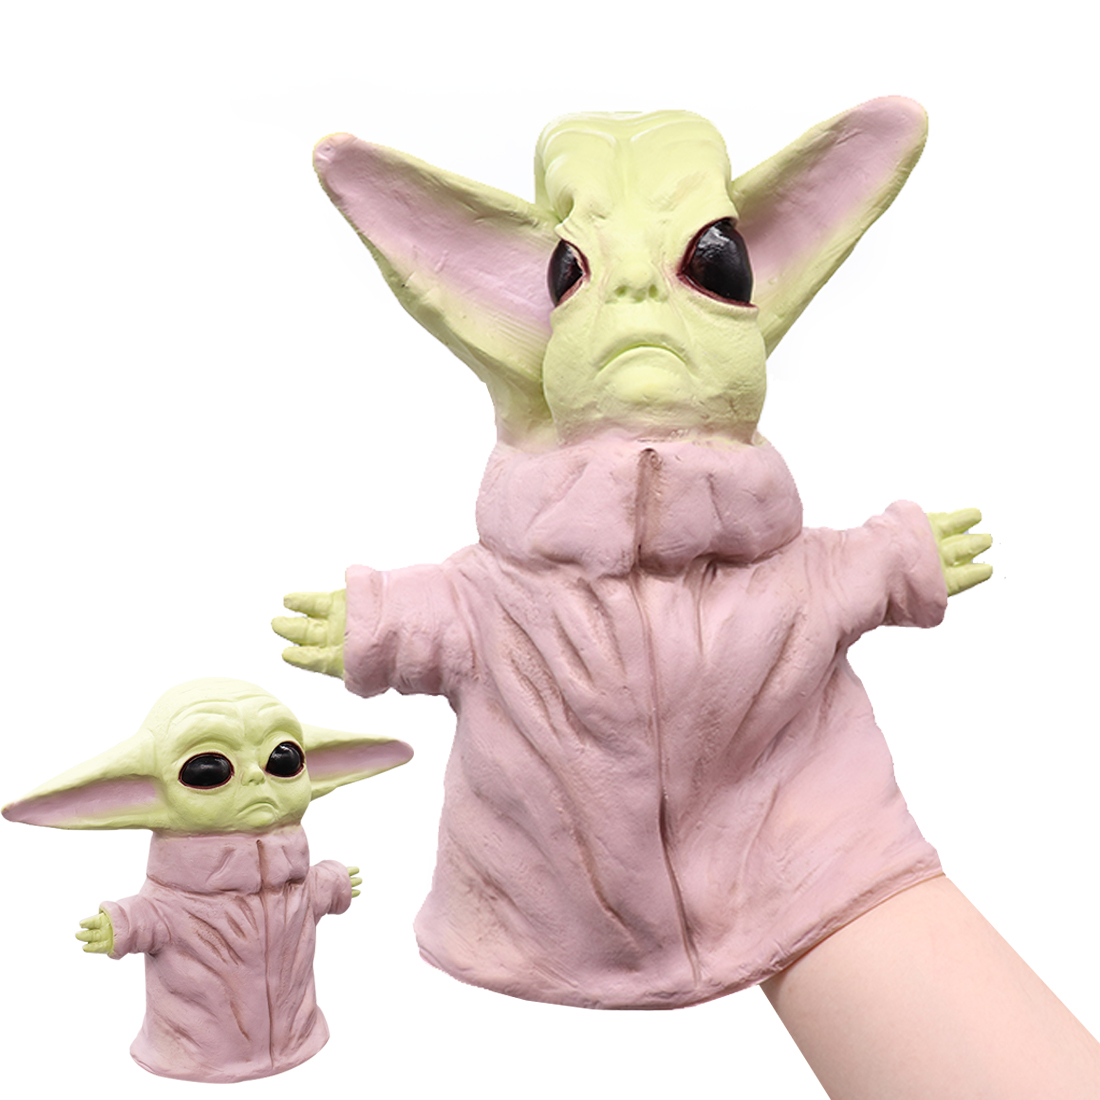 Baby Yoda Figure The Child Yoda Dolls The Mandalorian dolls Baby Yoda Doll Collectible Figure for Kids